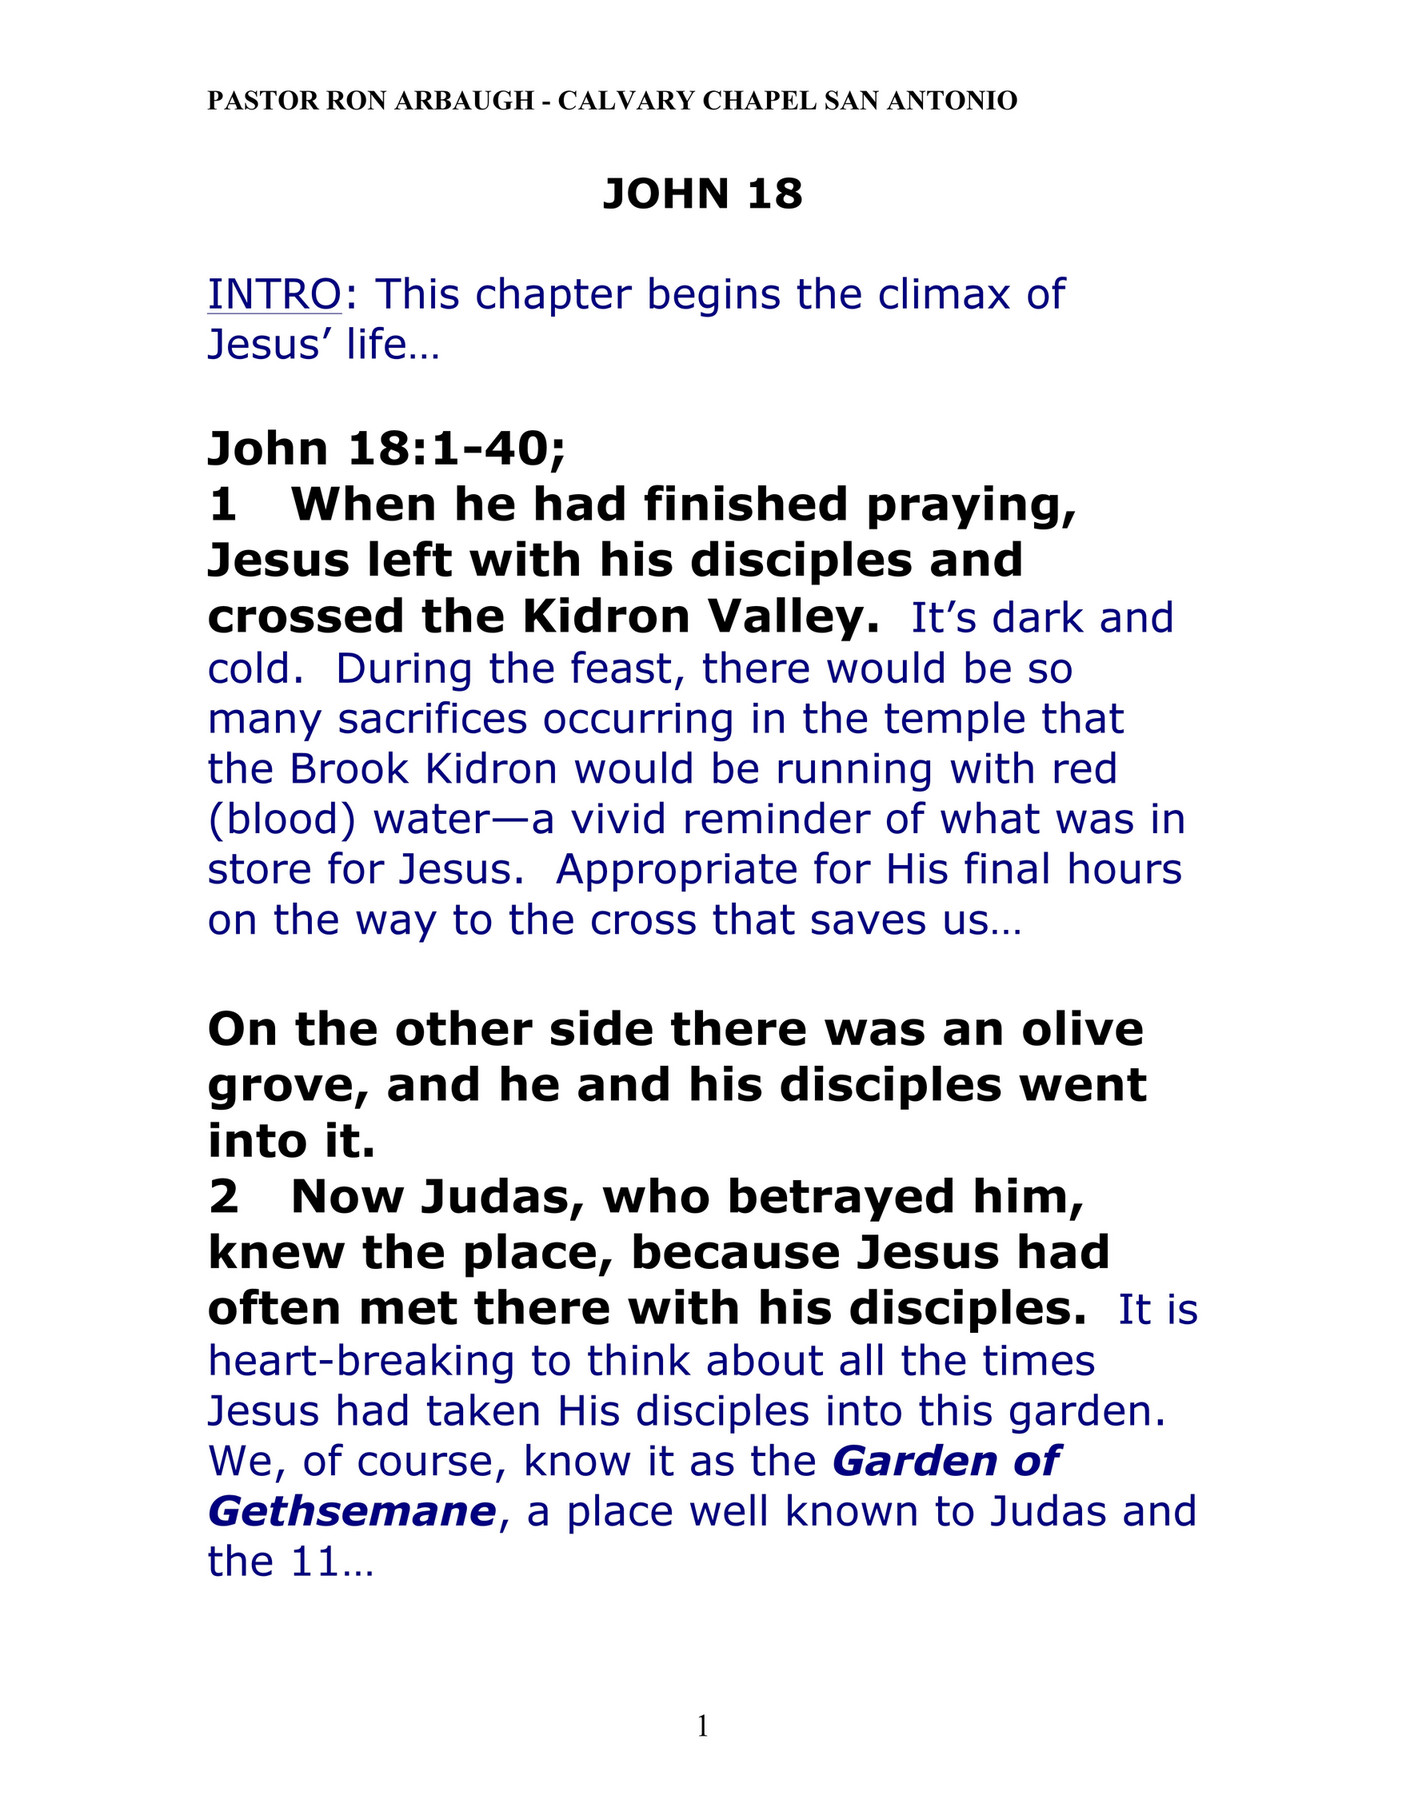 Calvary Chapel Of San Antonio John18 Page 2 Created With